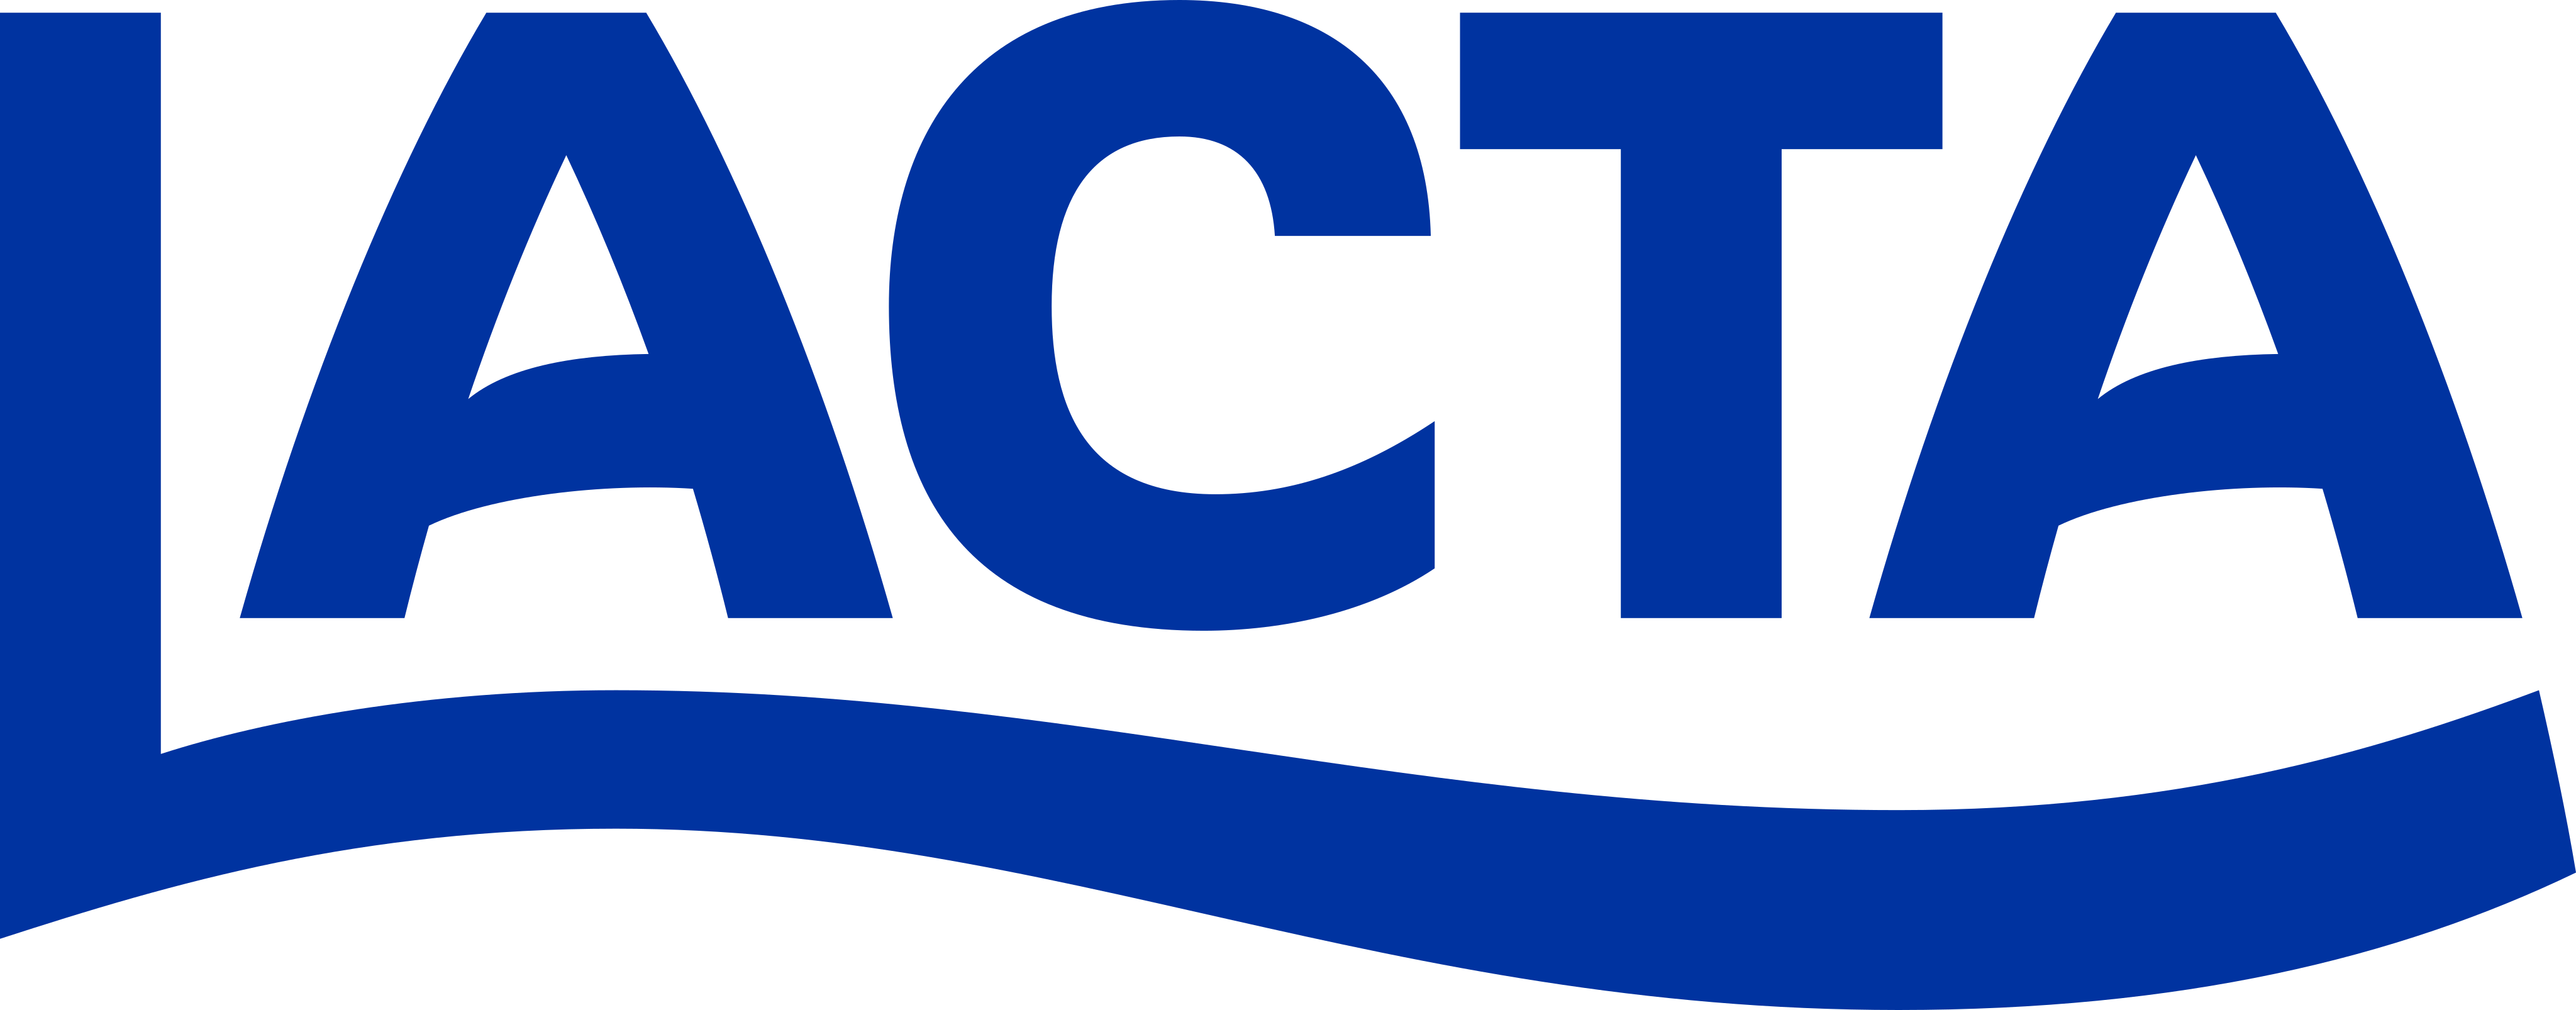 Logo Lacta